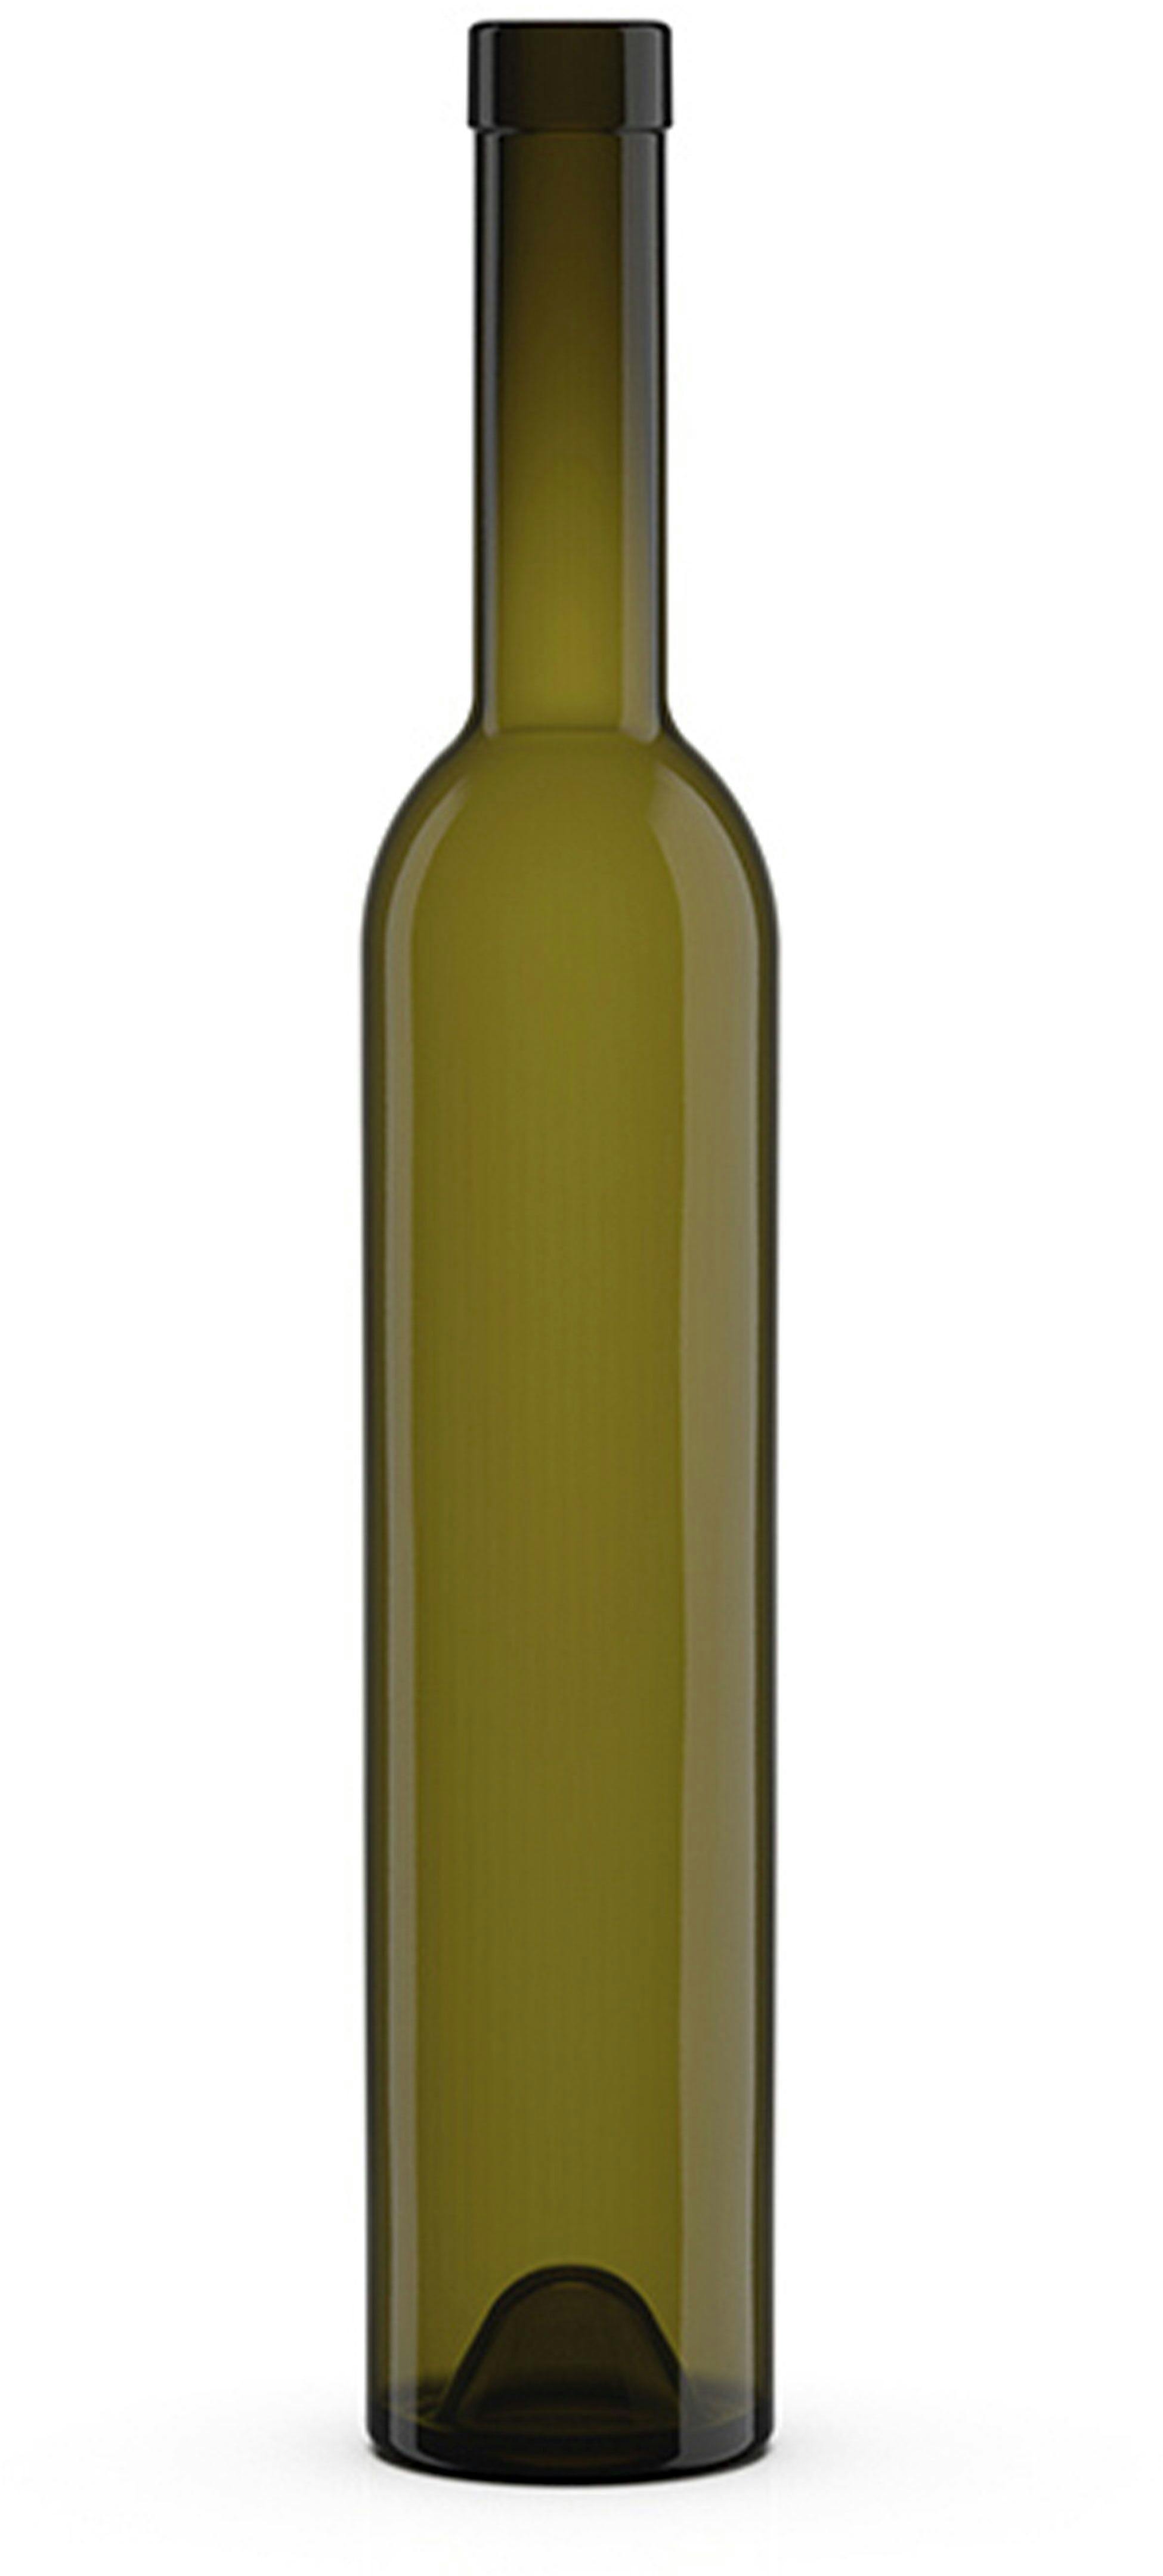 Bottle BORD S 25 500 F16 UVAG